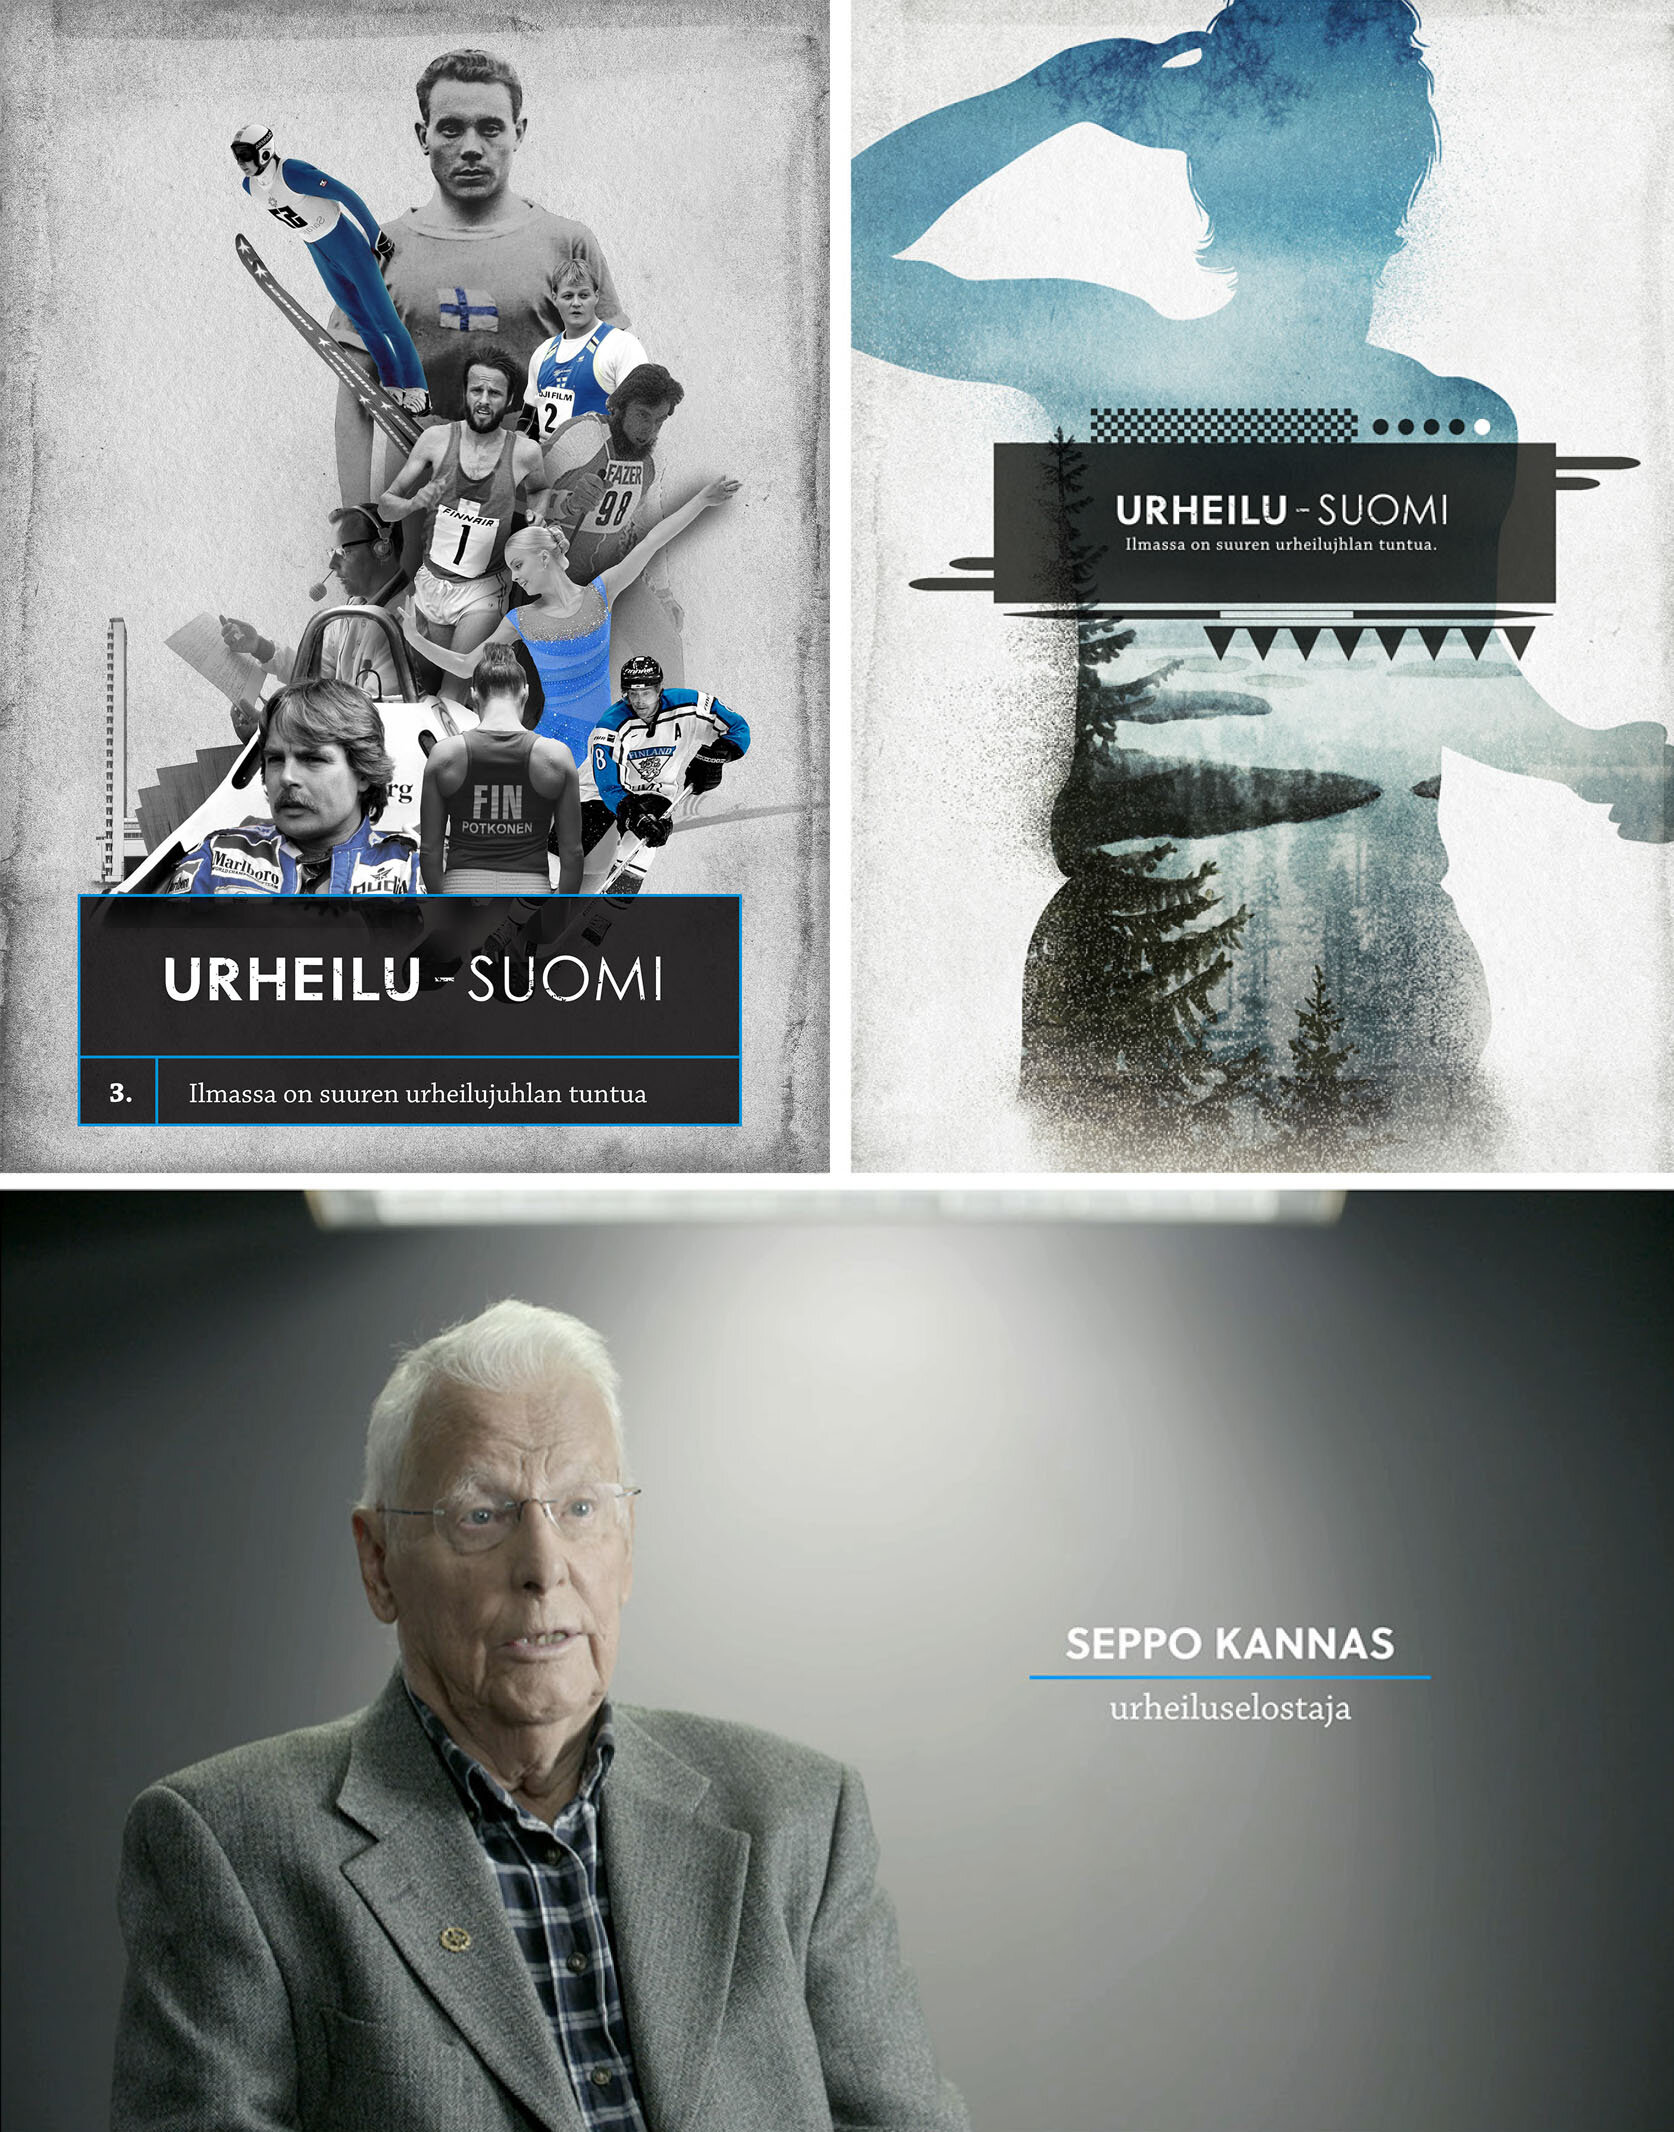 Urheilu - Suomi documentary series (Yle)